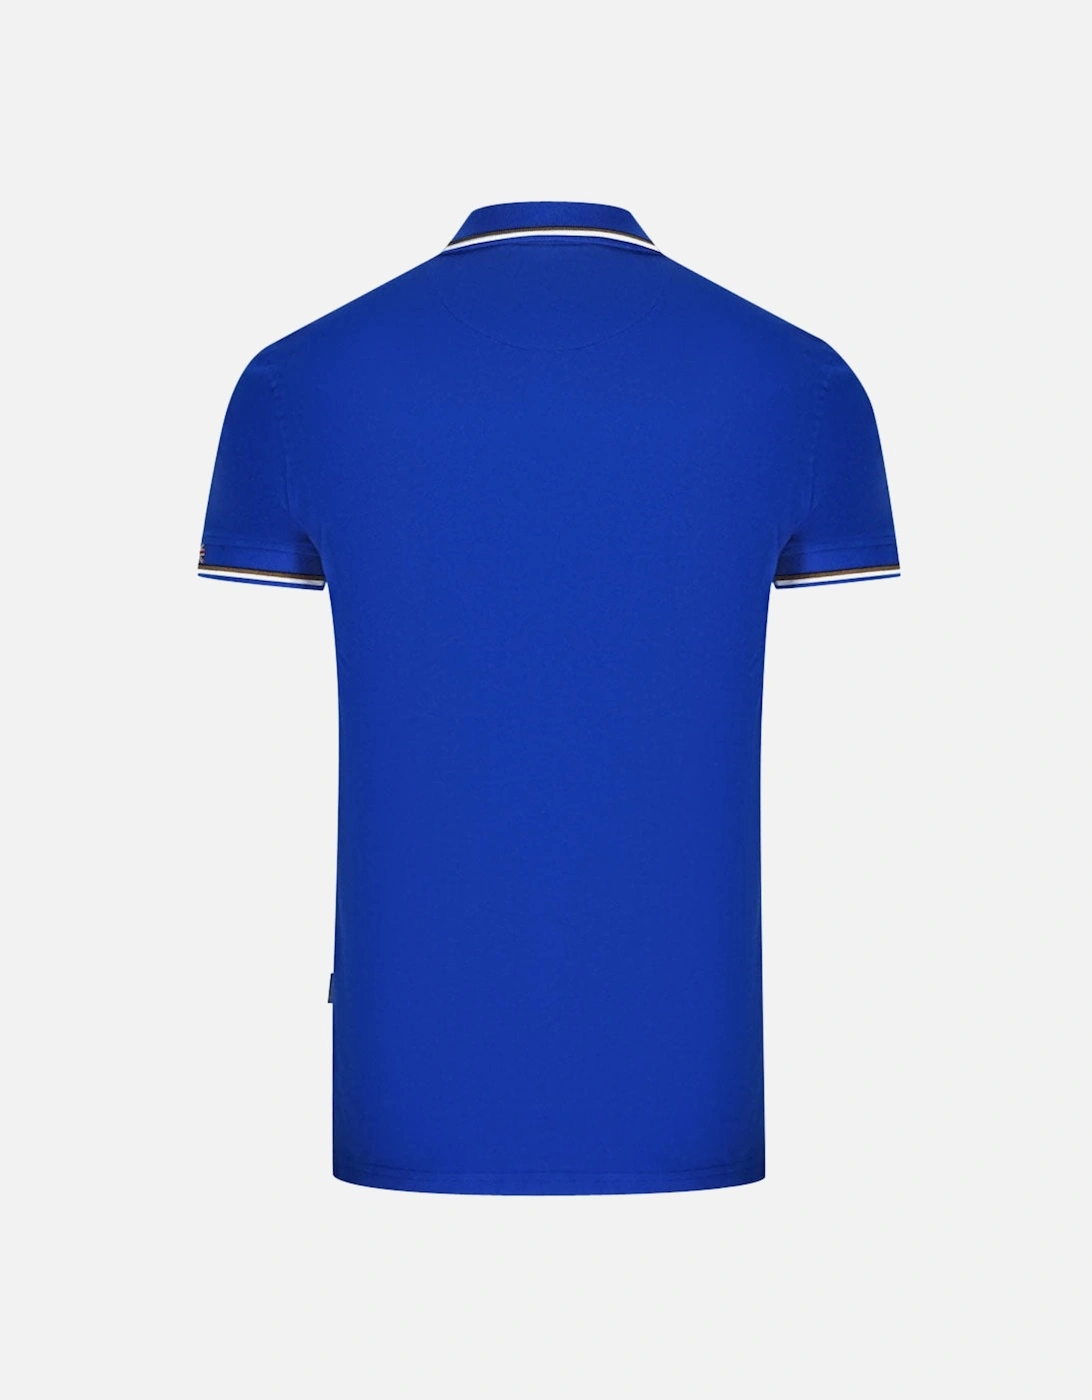 London Tipped Blue Polo Shirt